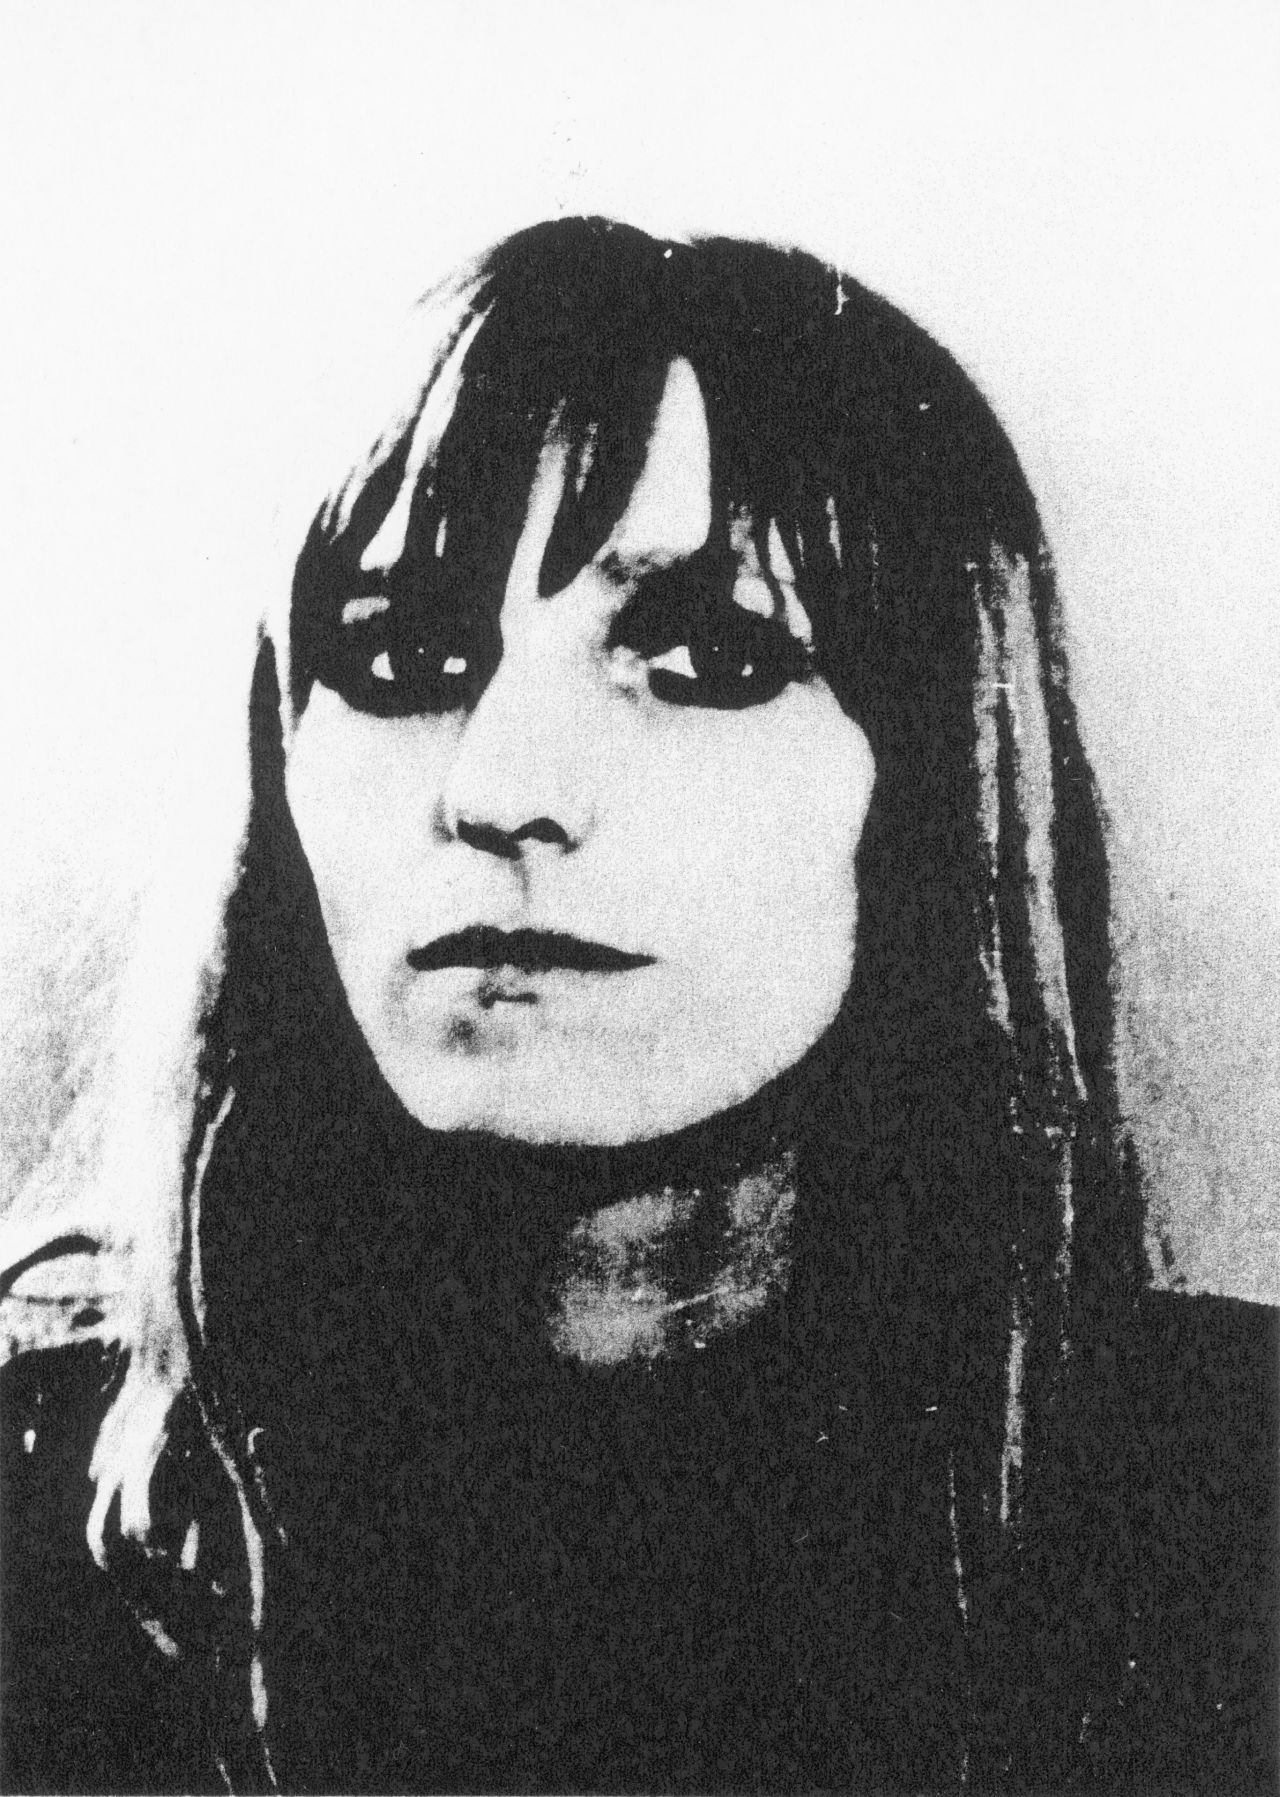 Porträtfoto der RAF-Terroristin Gudrun Ensslin, 1970.